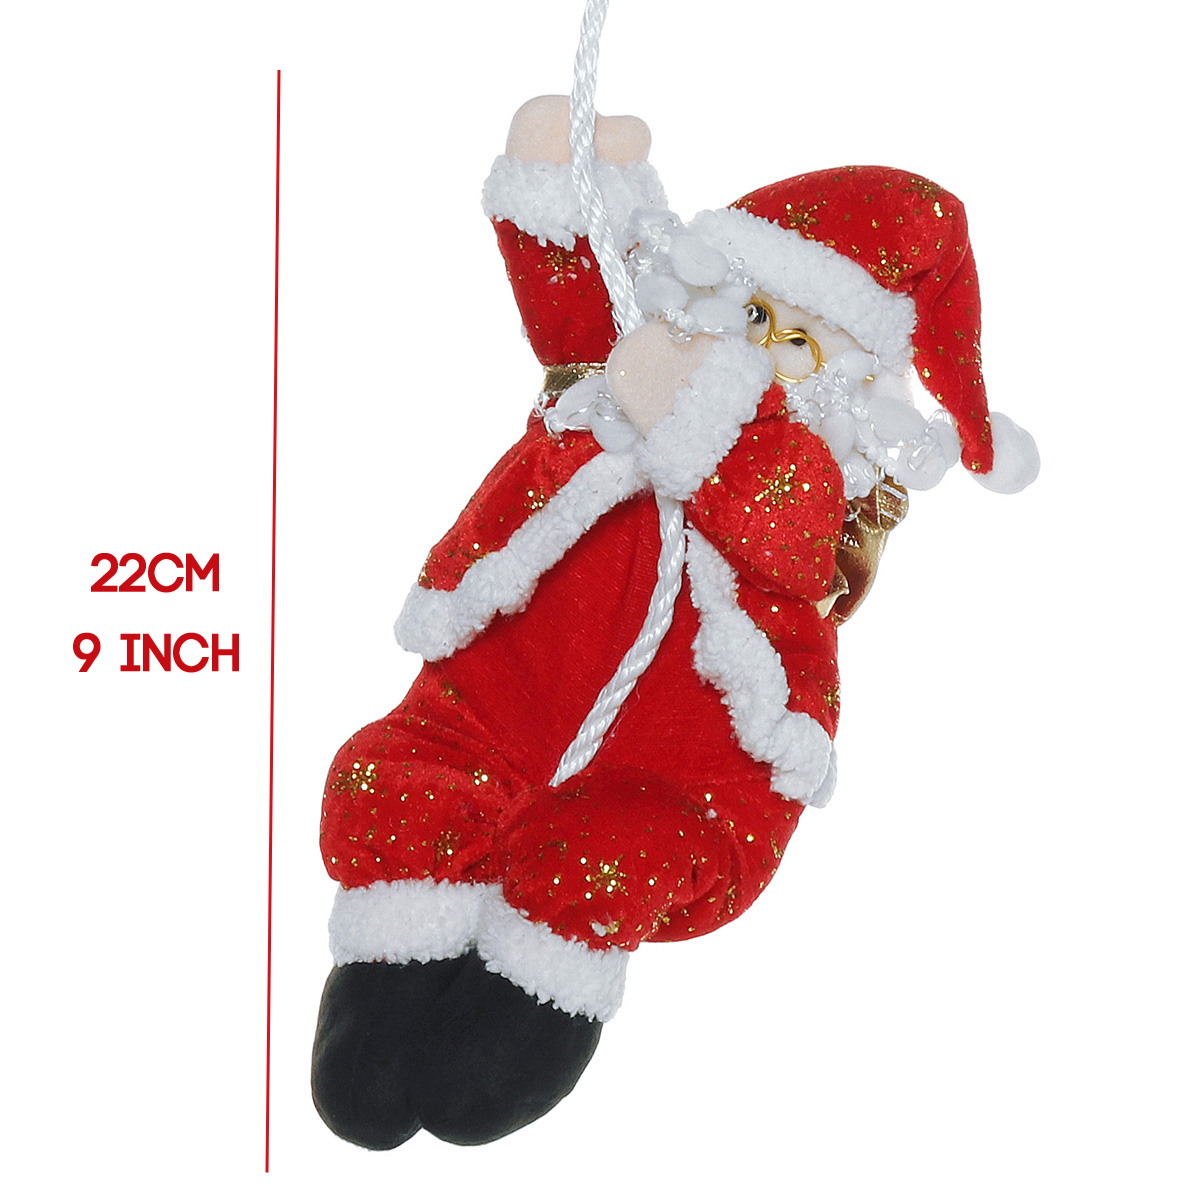 Santa-Climbing-On-Rope-Indoor-Outdoor-Christmas-Tree-Garden-Decorations-1590884-5